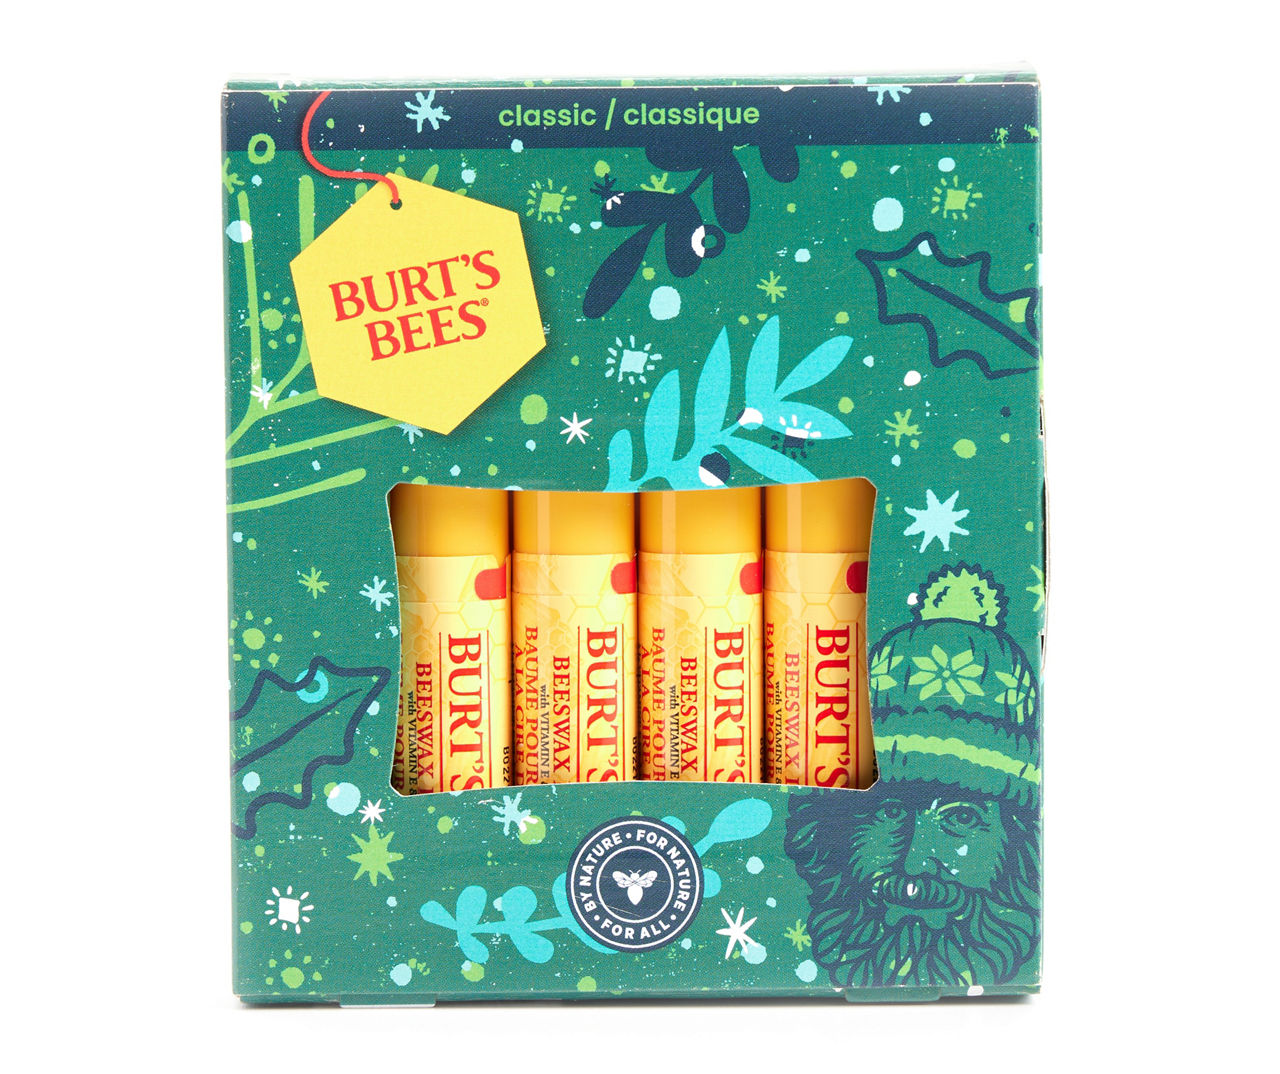 Burt's Bees Beeswax Bounty Classic Lip Balm Gift Set